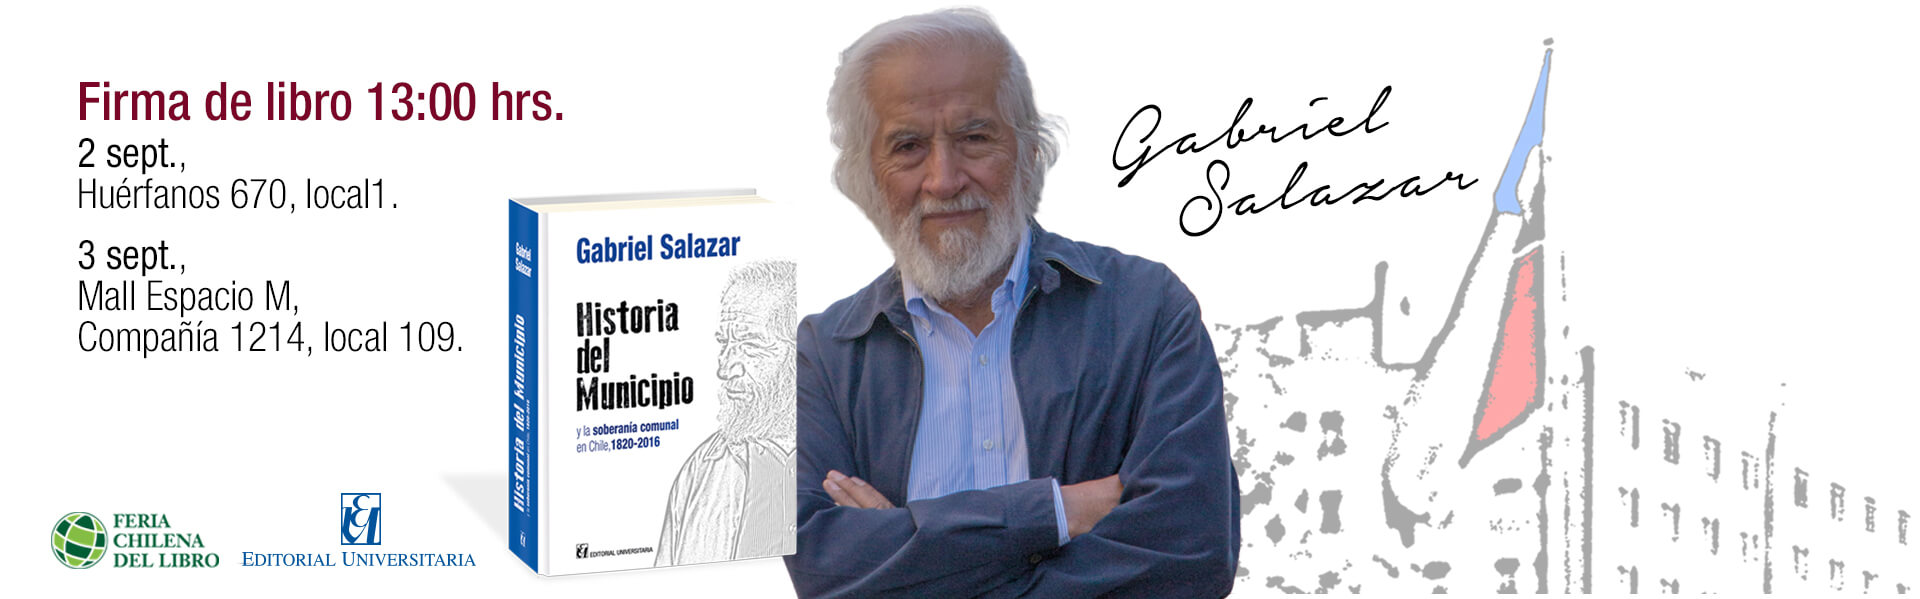 Gabriel Salazar Historia del Municipio